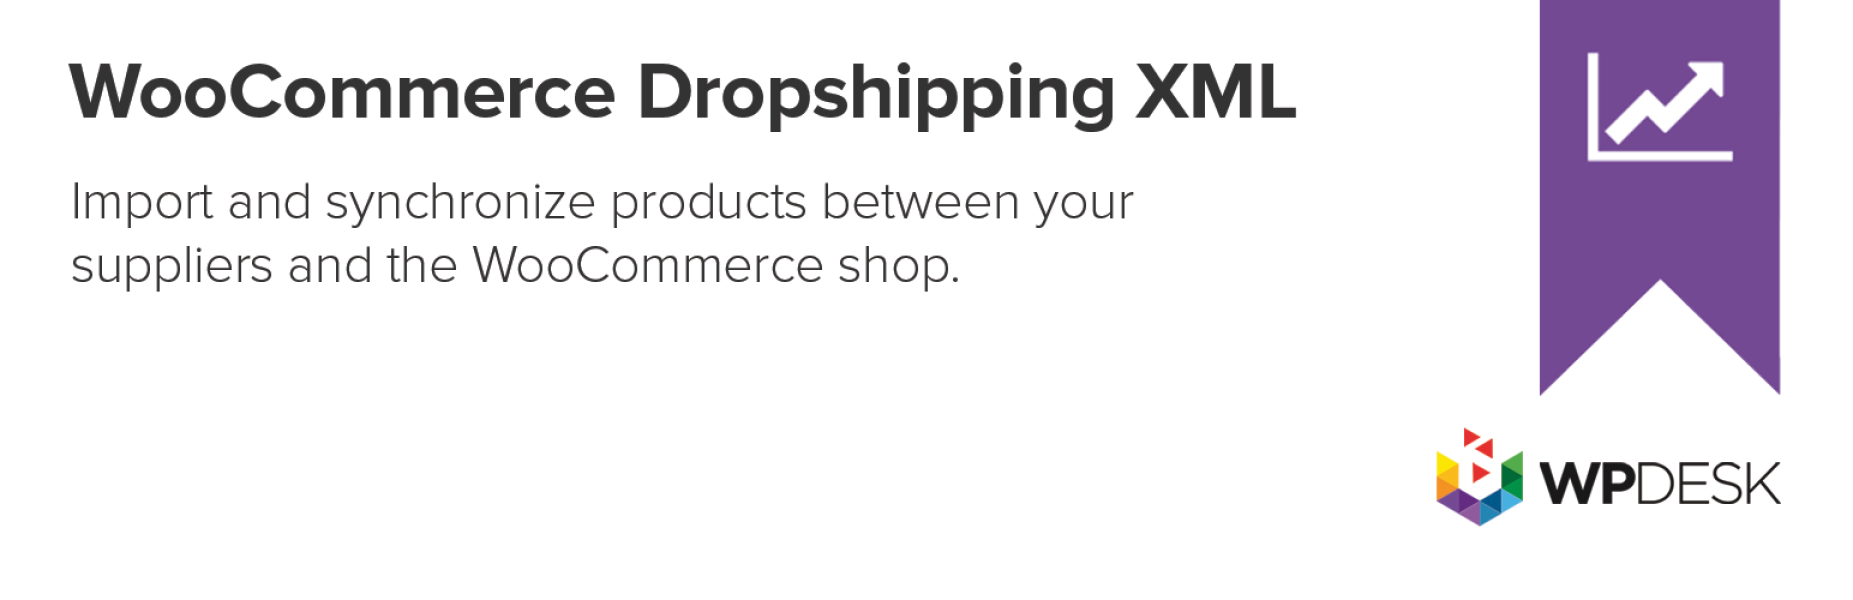 Dropshipping XML WooCommerce